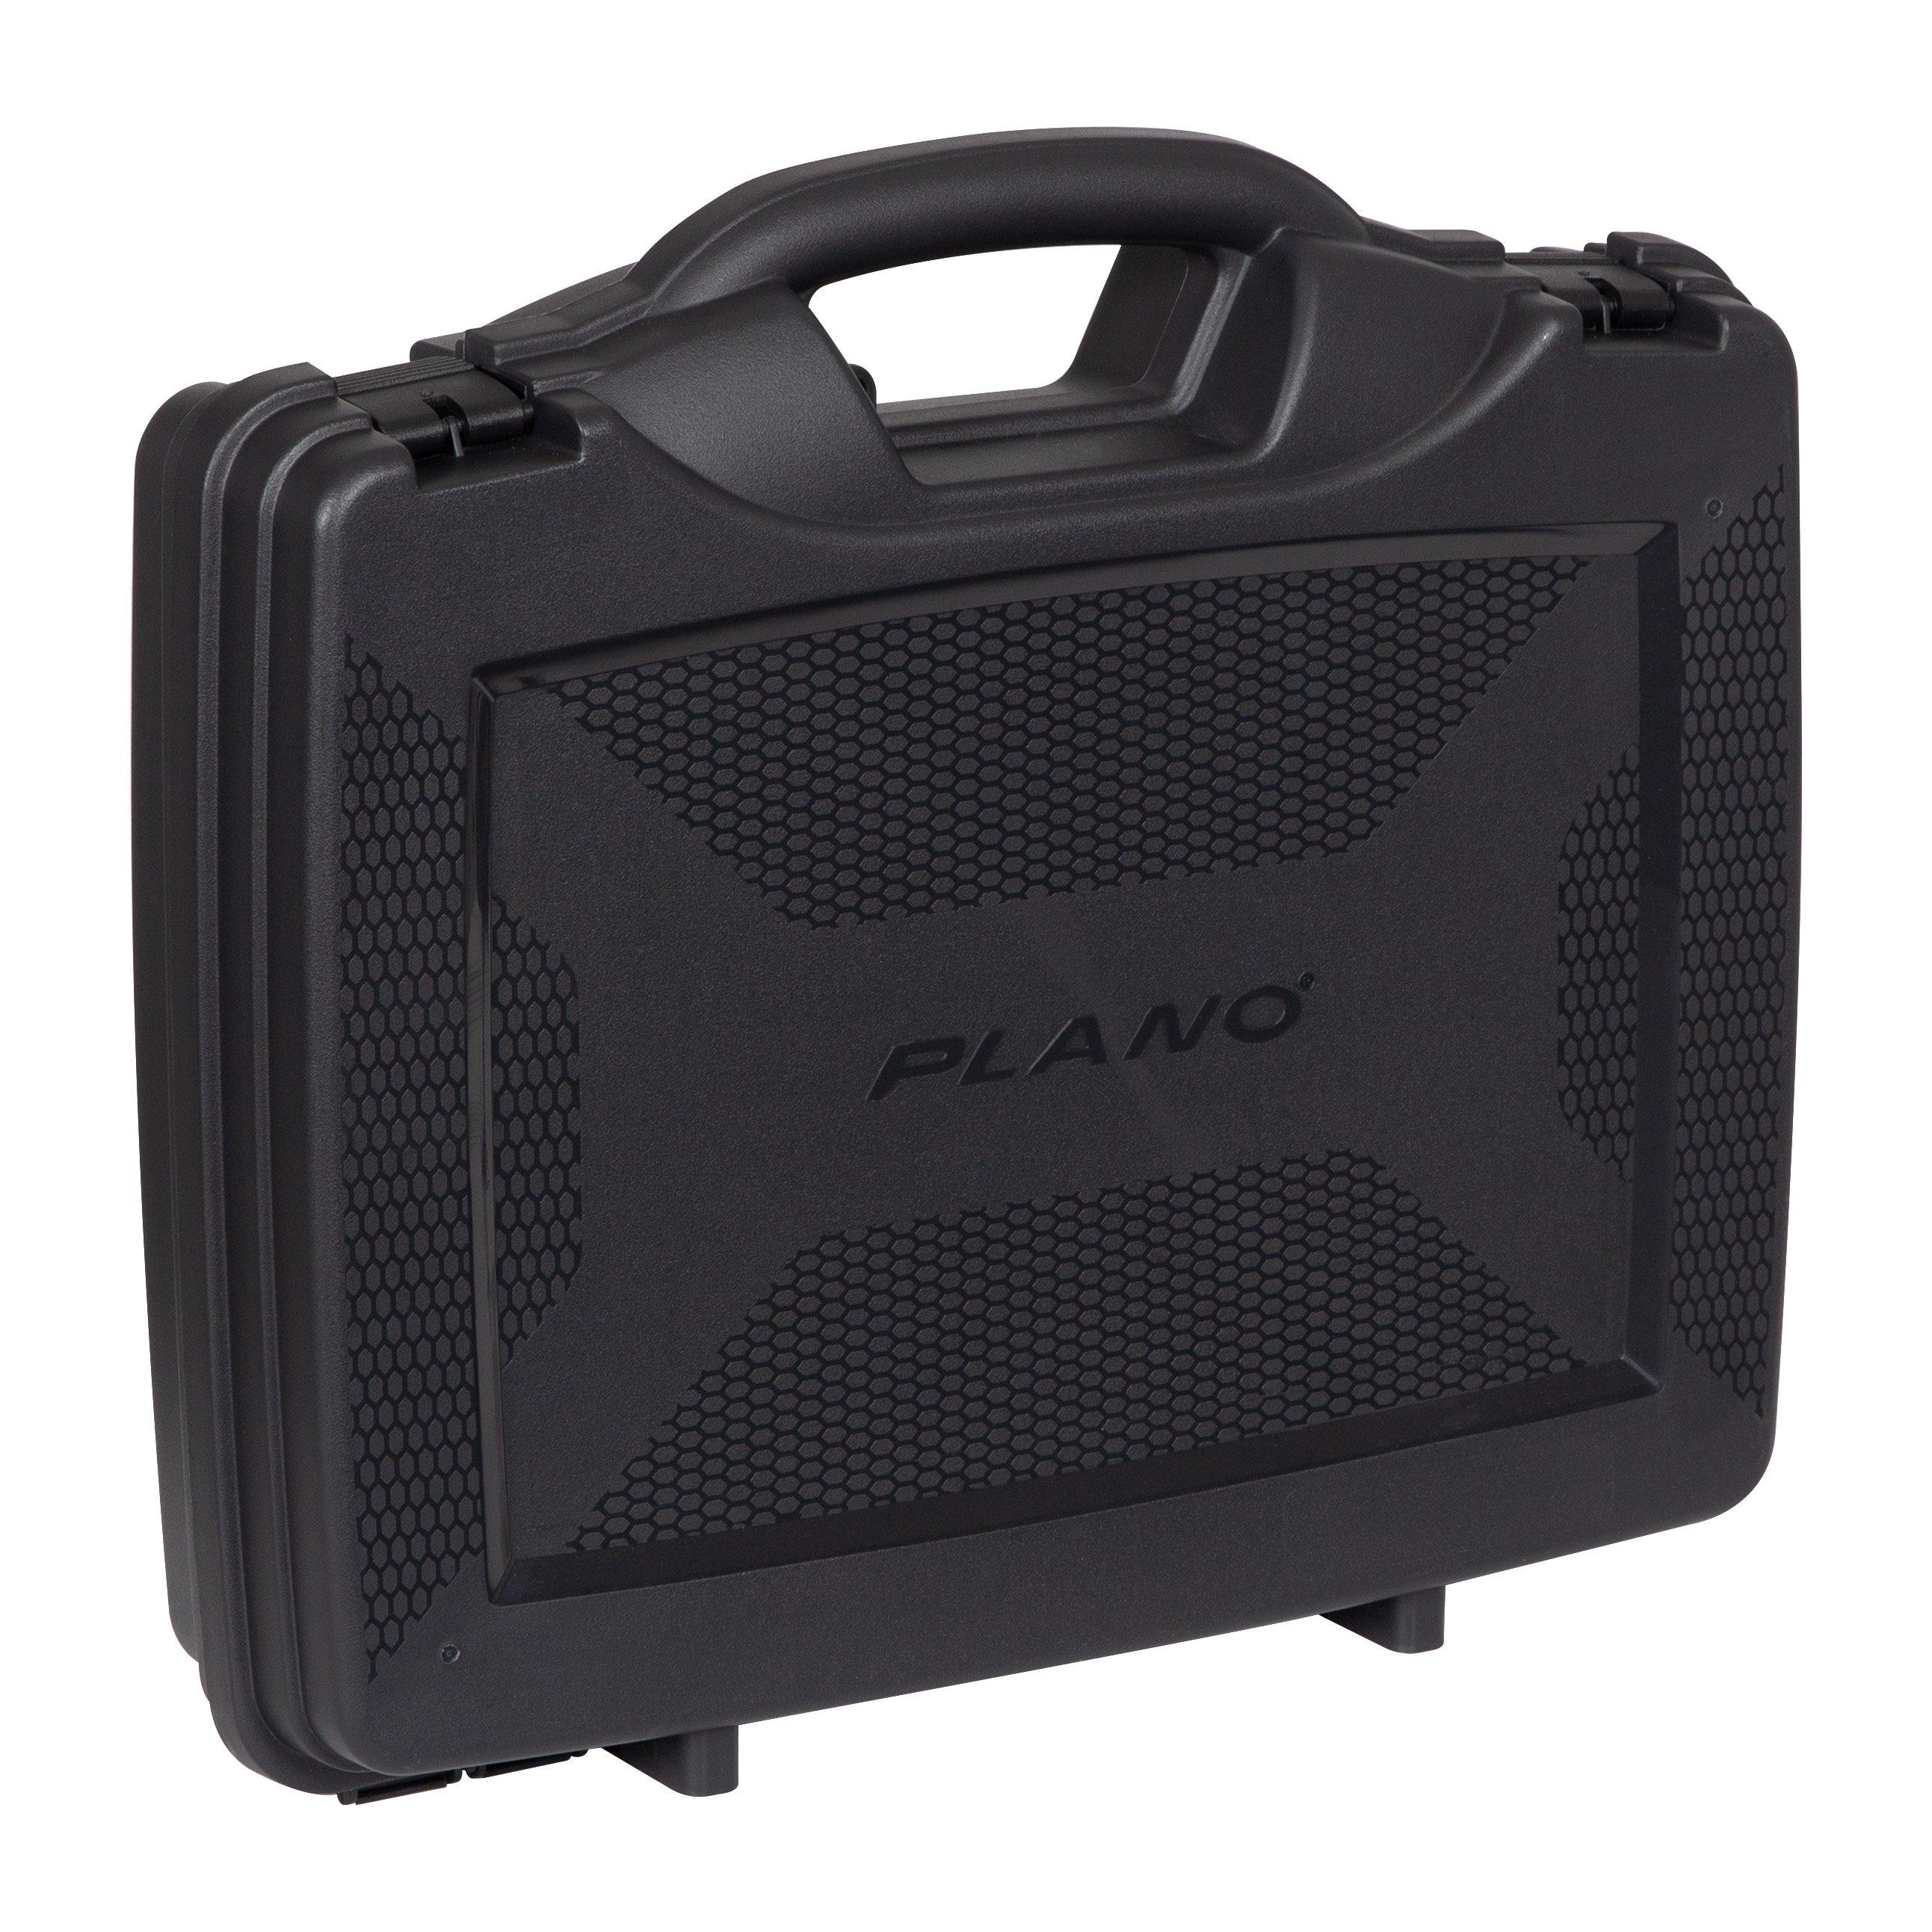 Plano Protector Series™ Double-Pistol Case